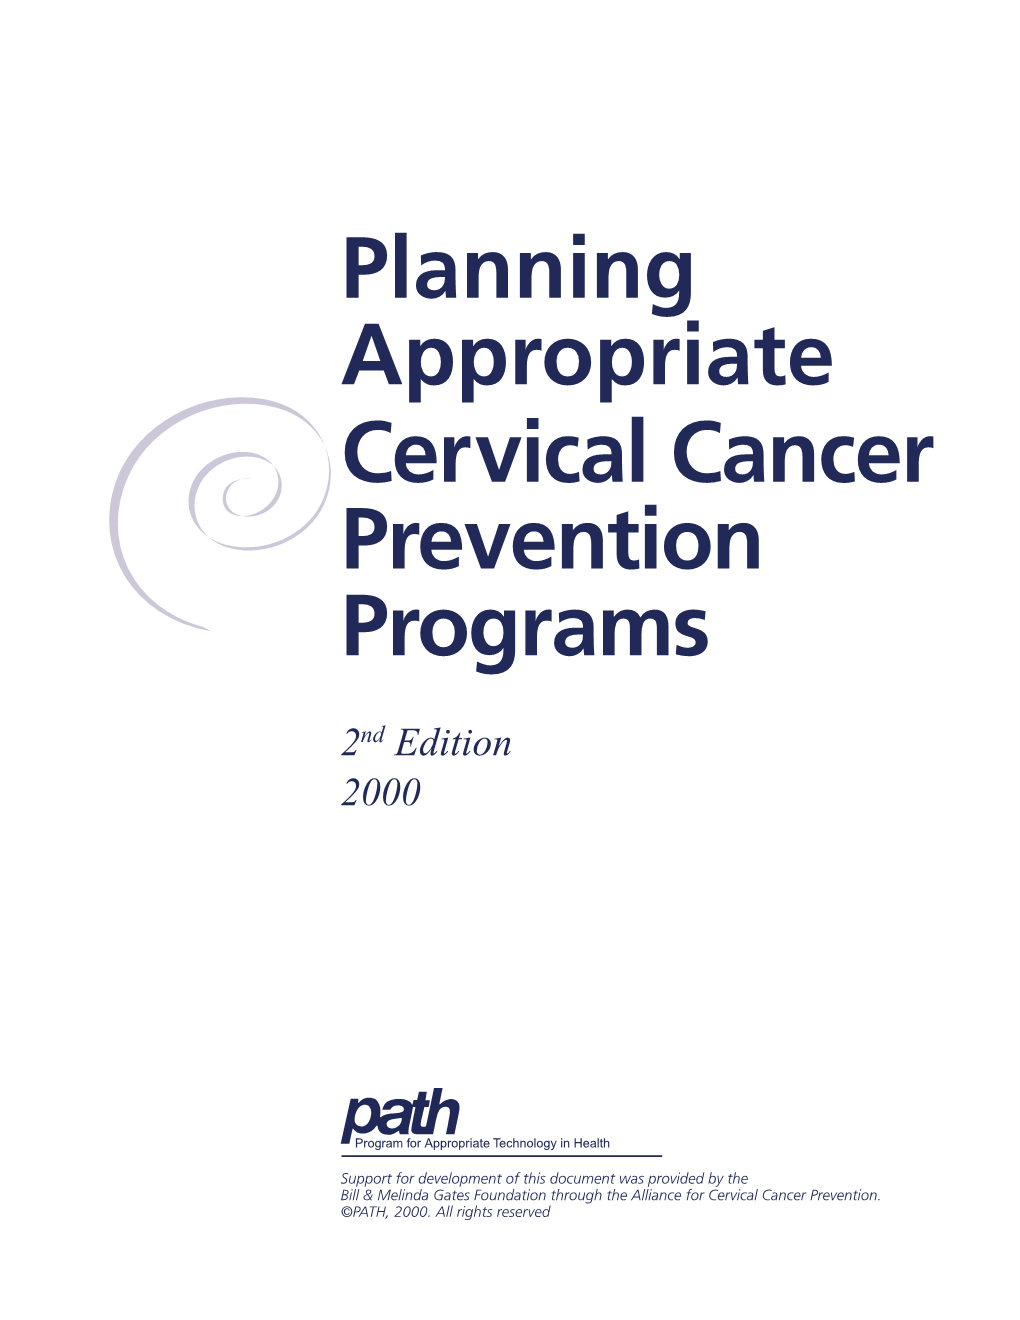 Planning Appropriate Cervical Cancer Prevention Programs